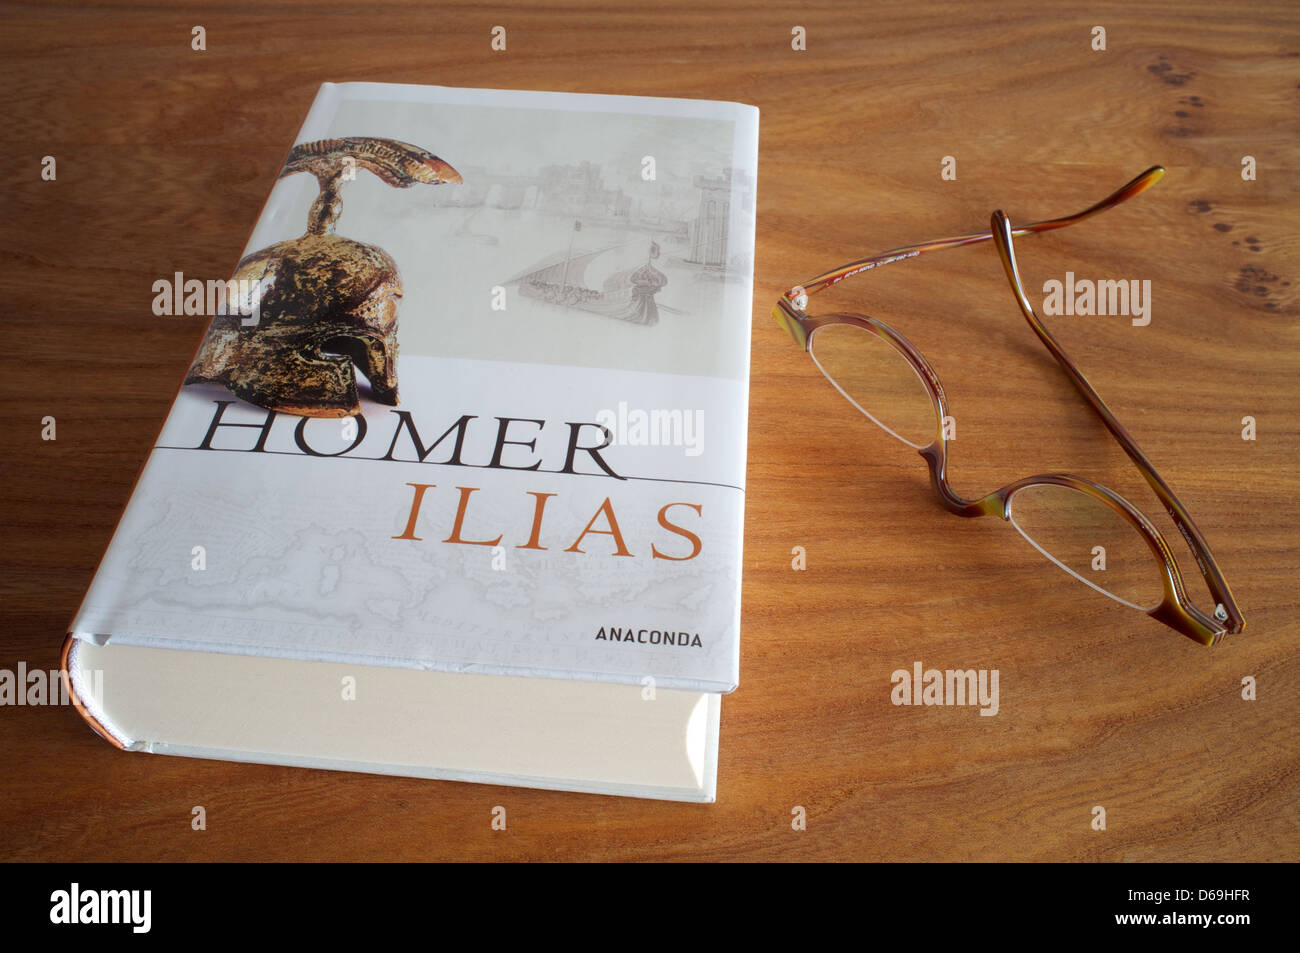 Homers Ilias Hardcover-Buch Stockfoto